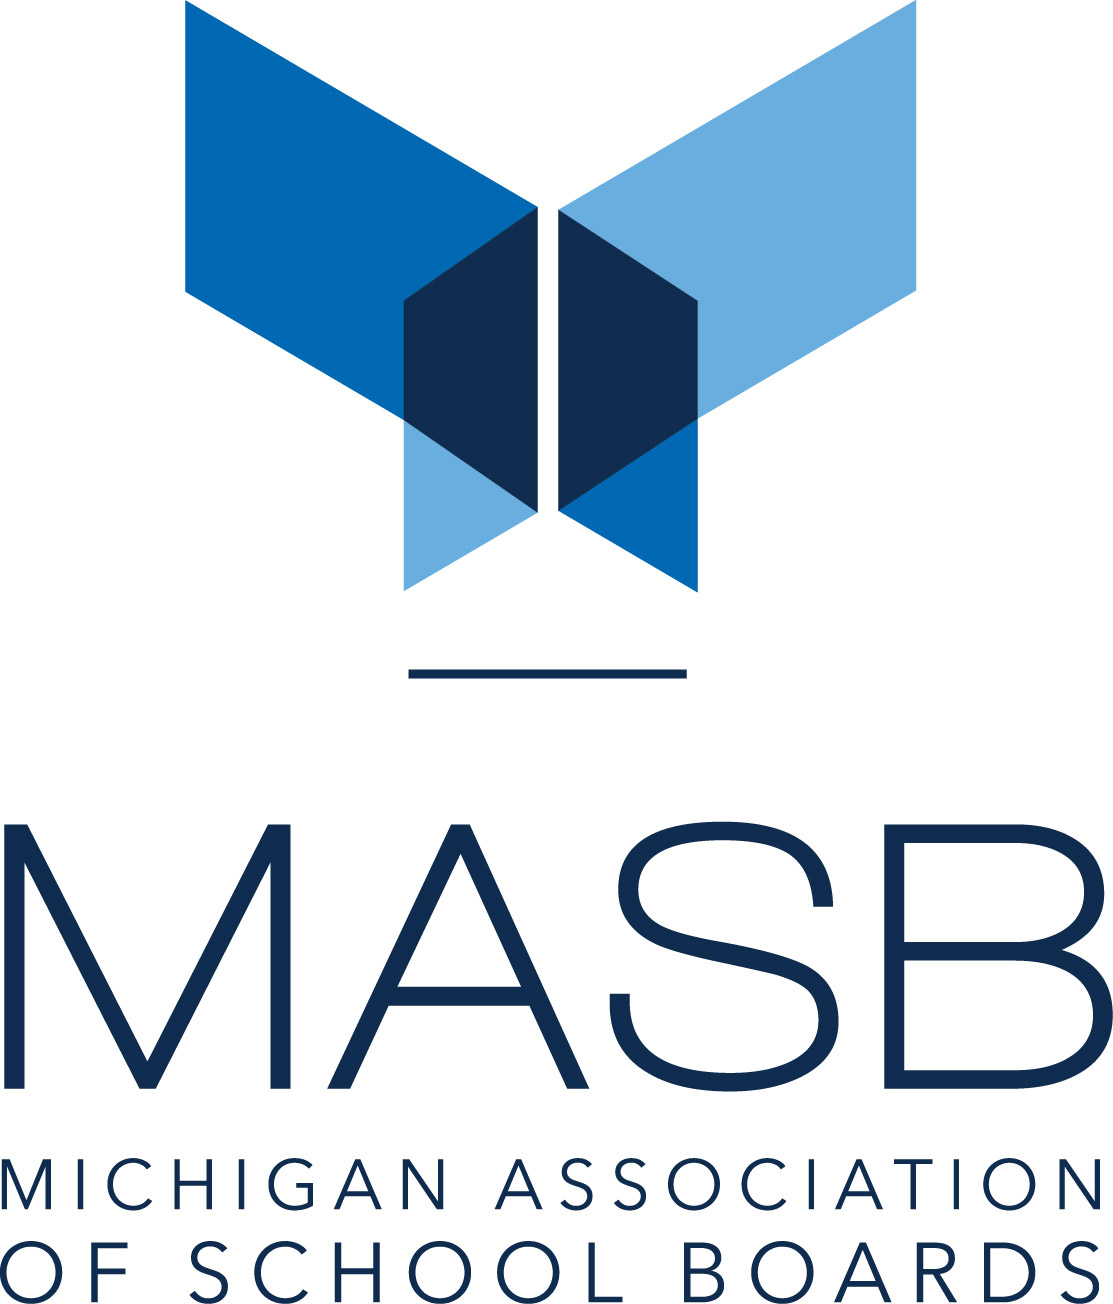 Michigan Association of School Boards logo